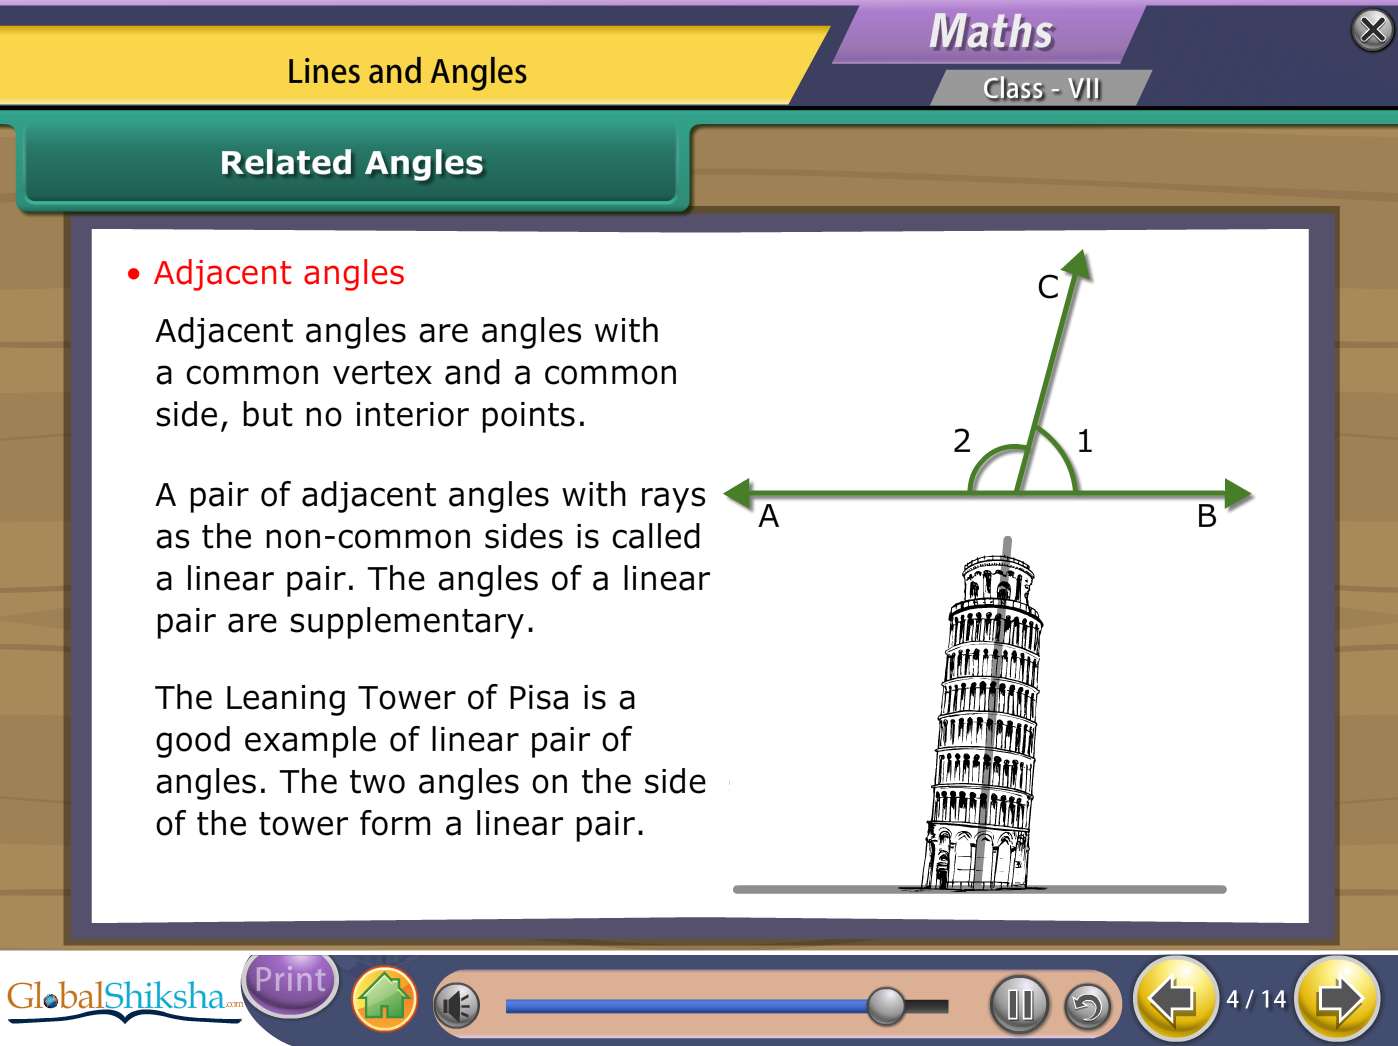 Karnataka State Board Class 7 Maths & Science Animated Pendrive in English